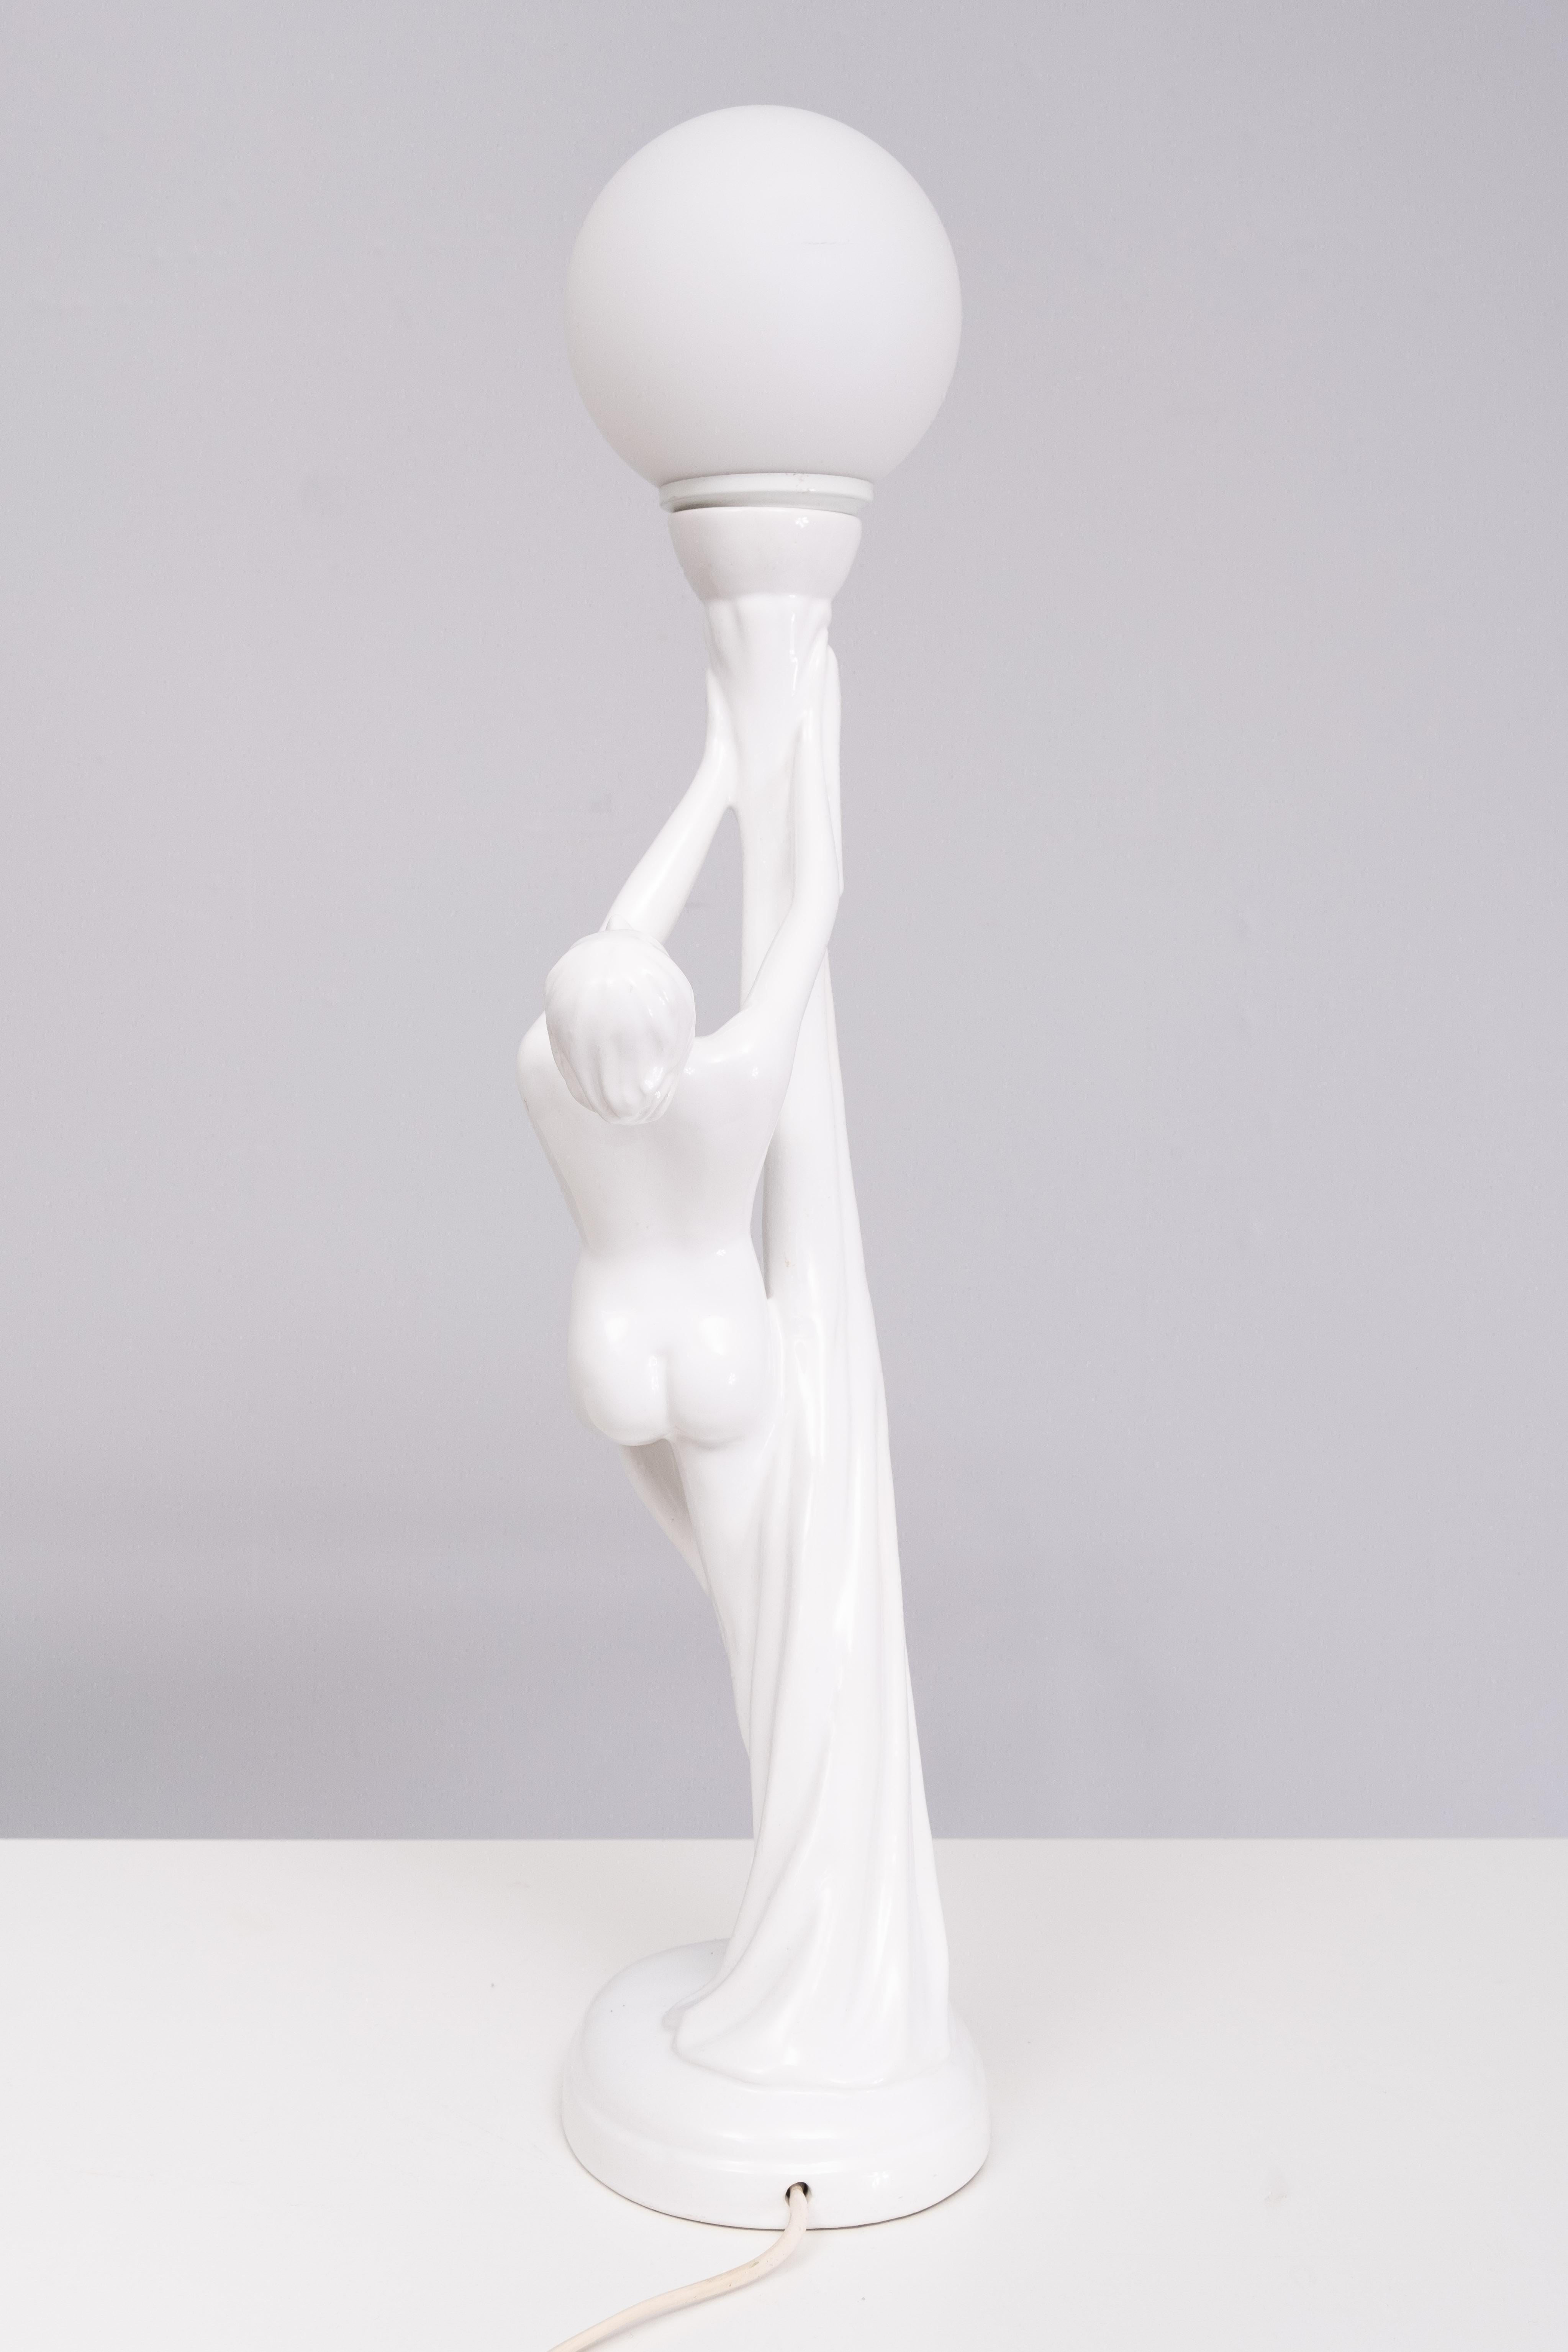  Art Deco  White Ceramic naked Woman lamp  Globe  Italy  1970s For Sale 3